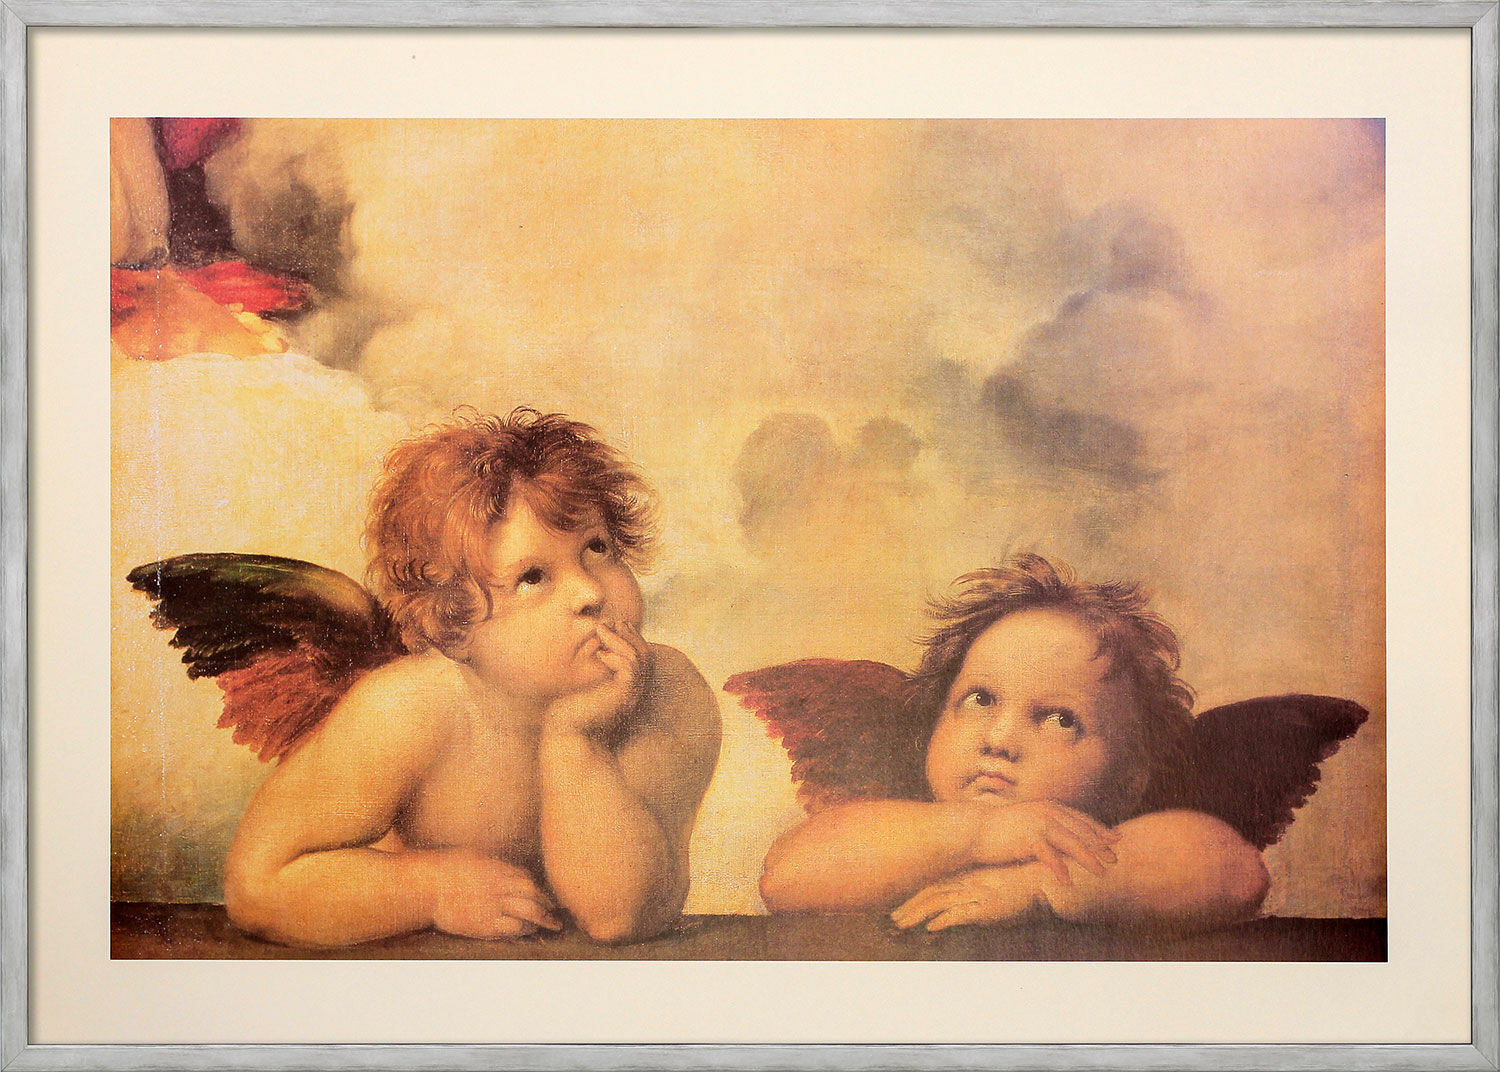 Beeld "Twee engelen", ingelijst von Raffaelo Santi